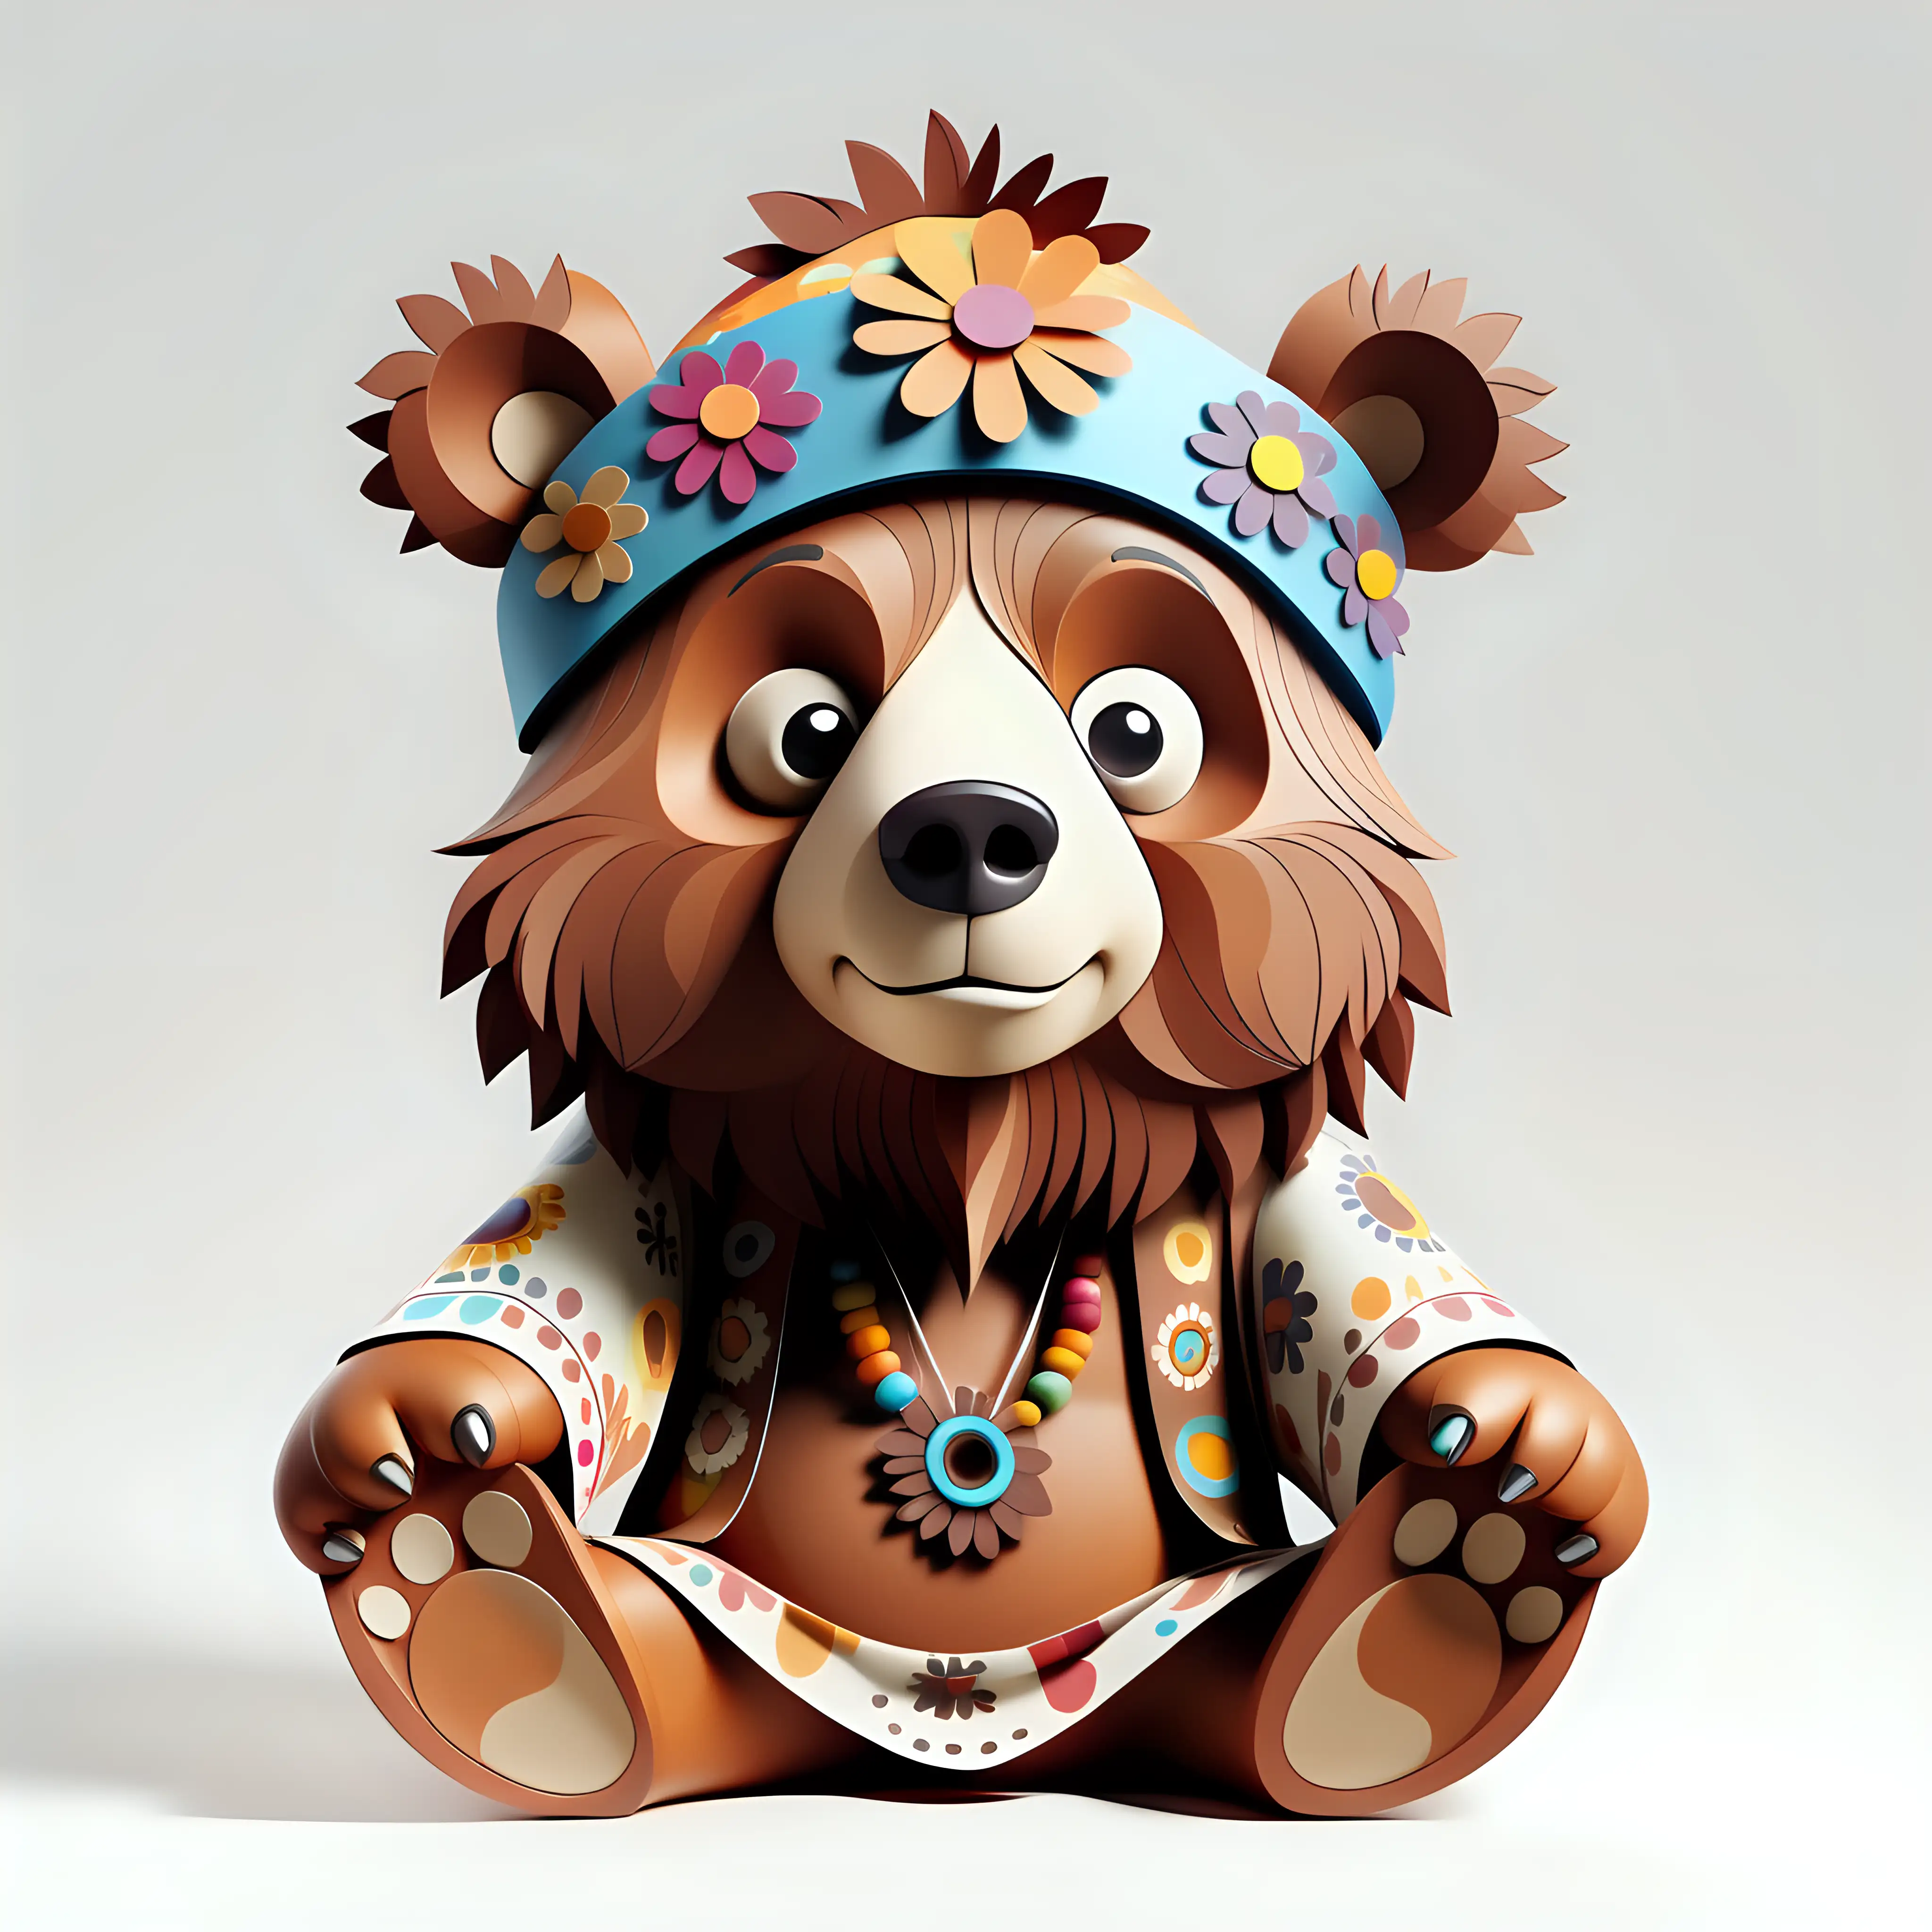 Adorable Bear Hippie in Vibrant Paper Cutout Cartoon Style